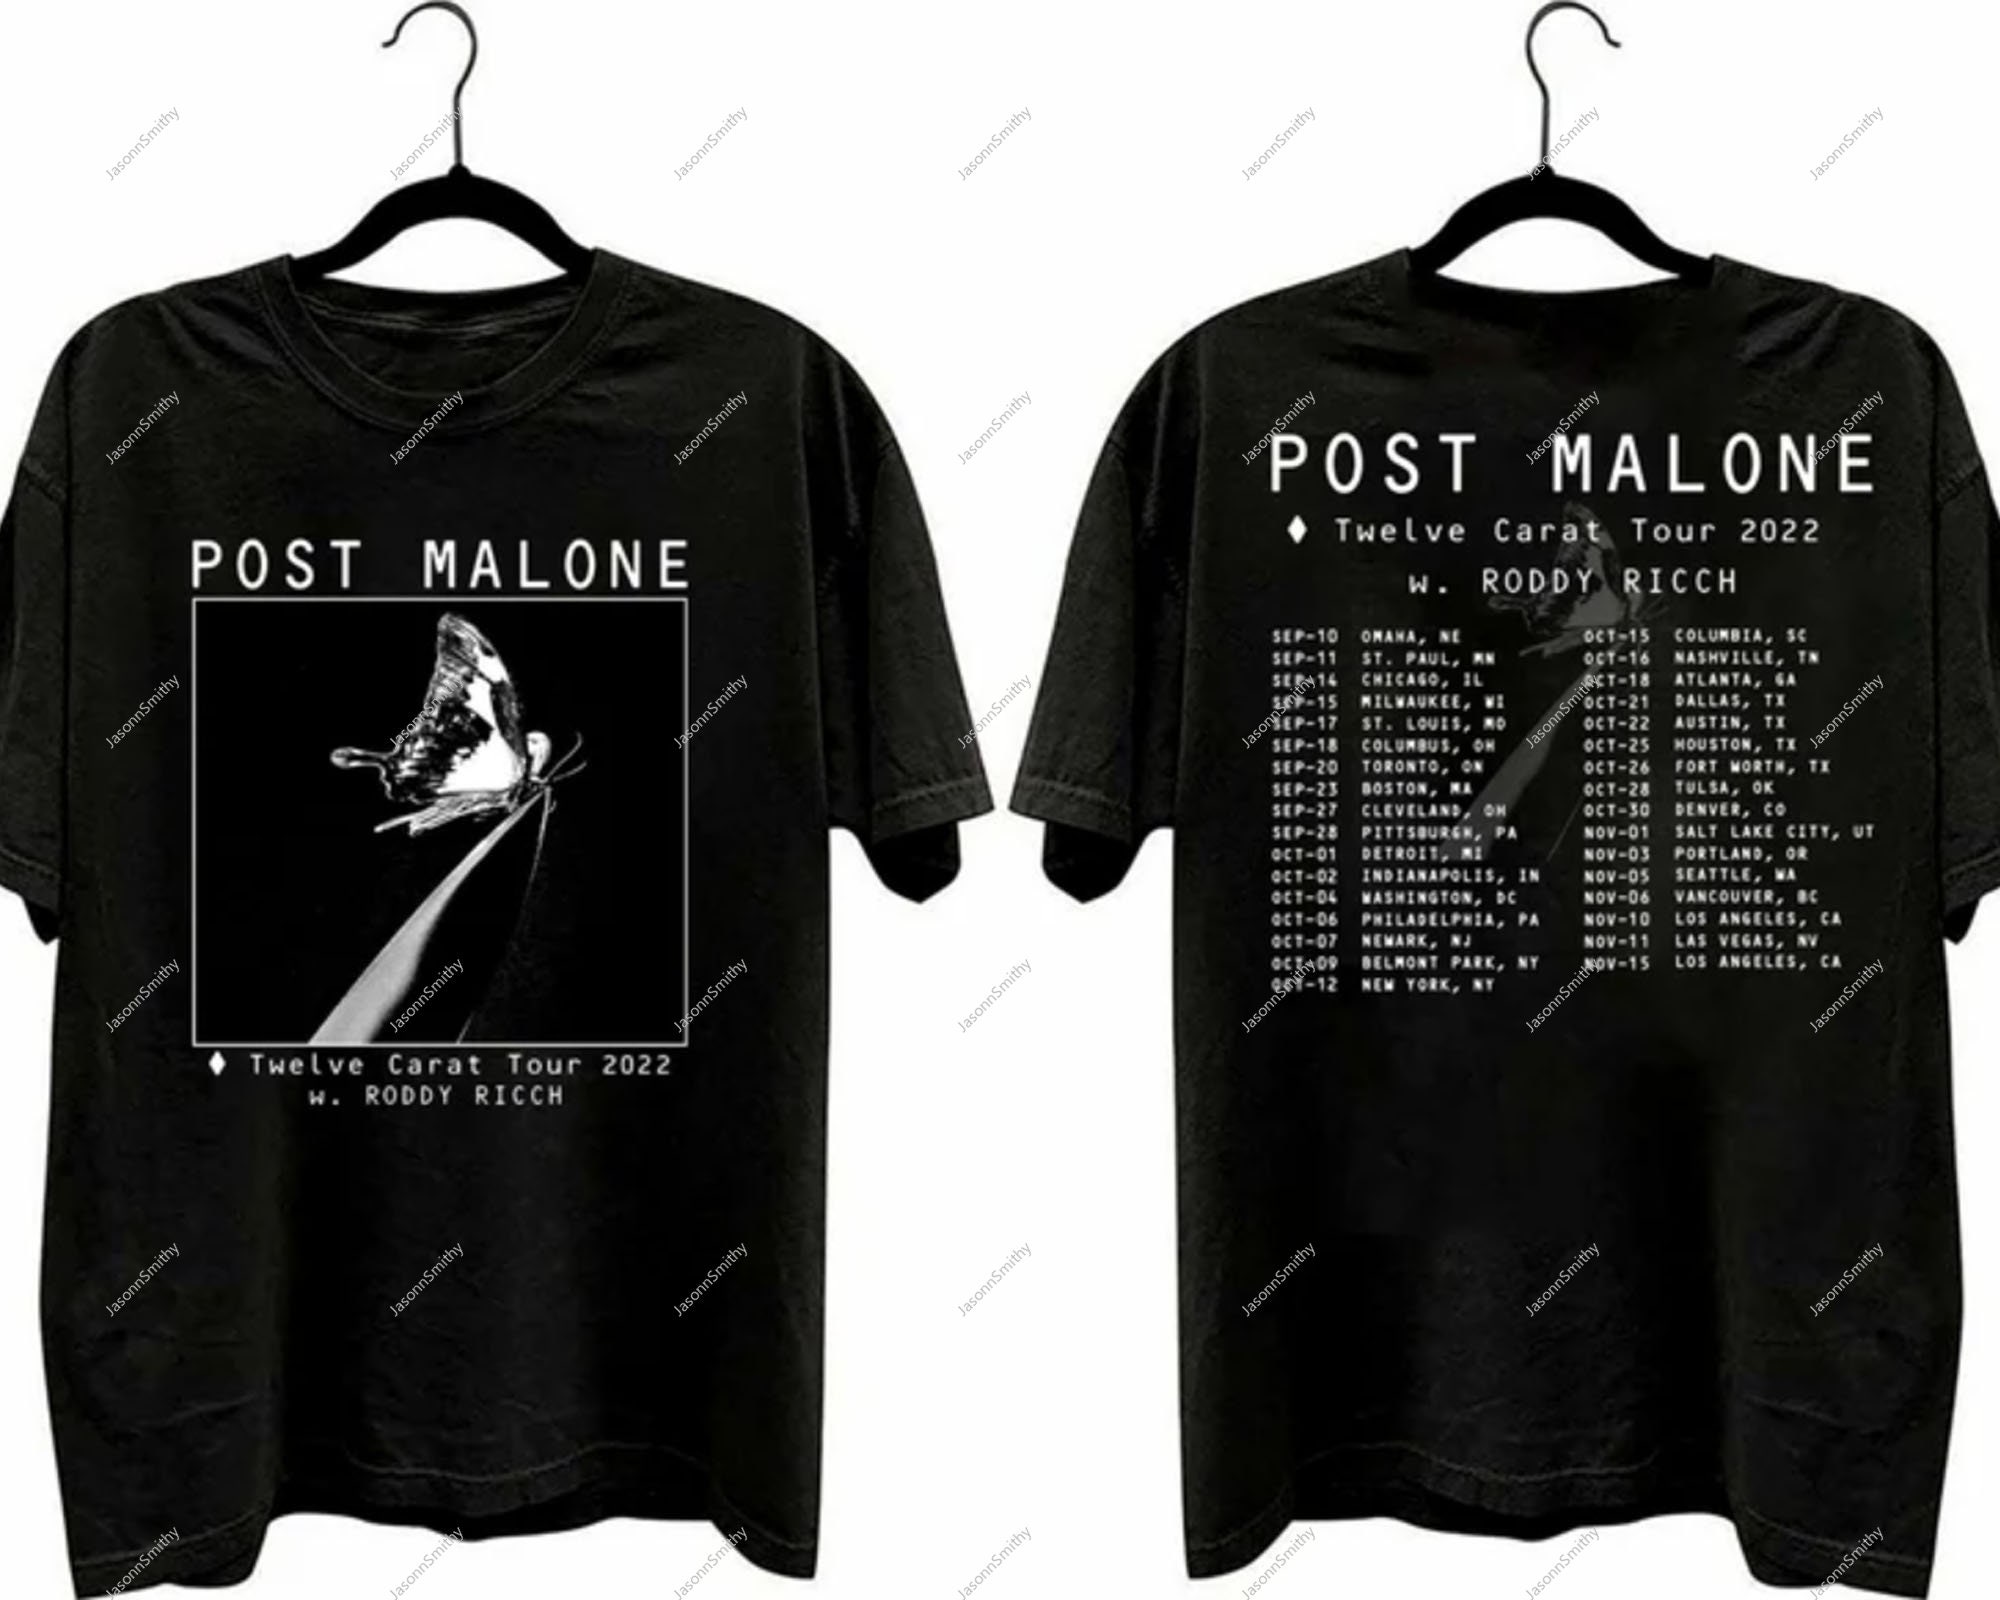 Post Malone Twelve Carat 2022 Tour Shirt, Post Malone Shirt